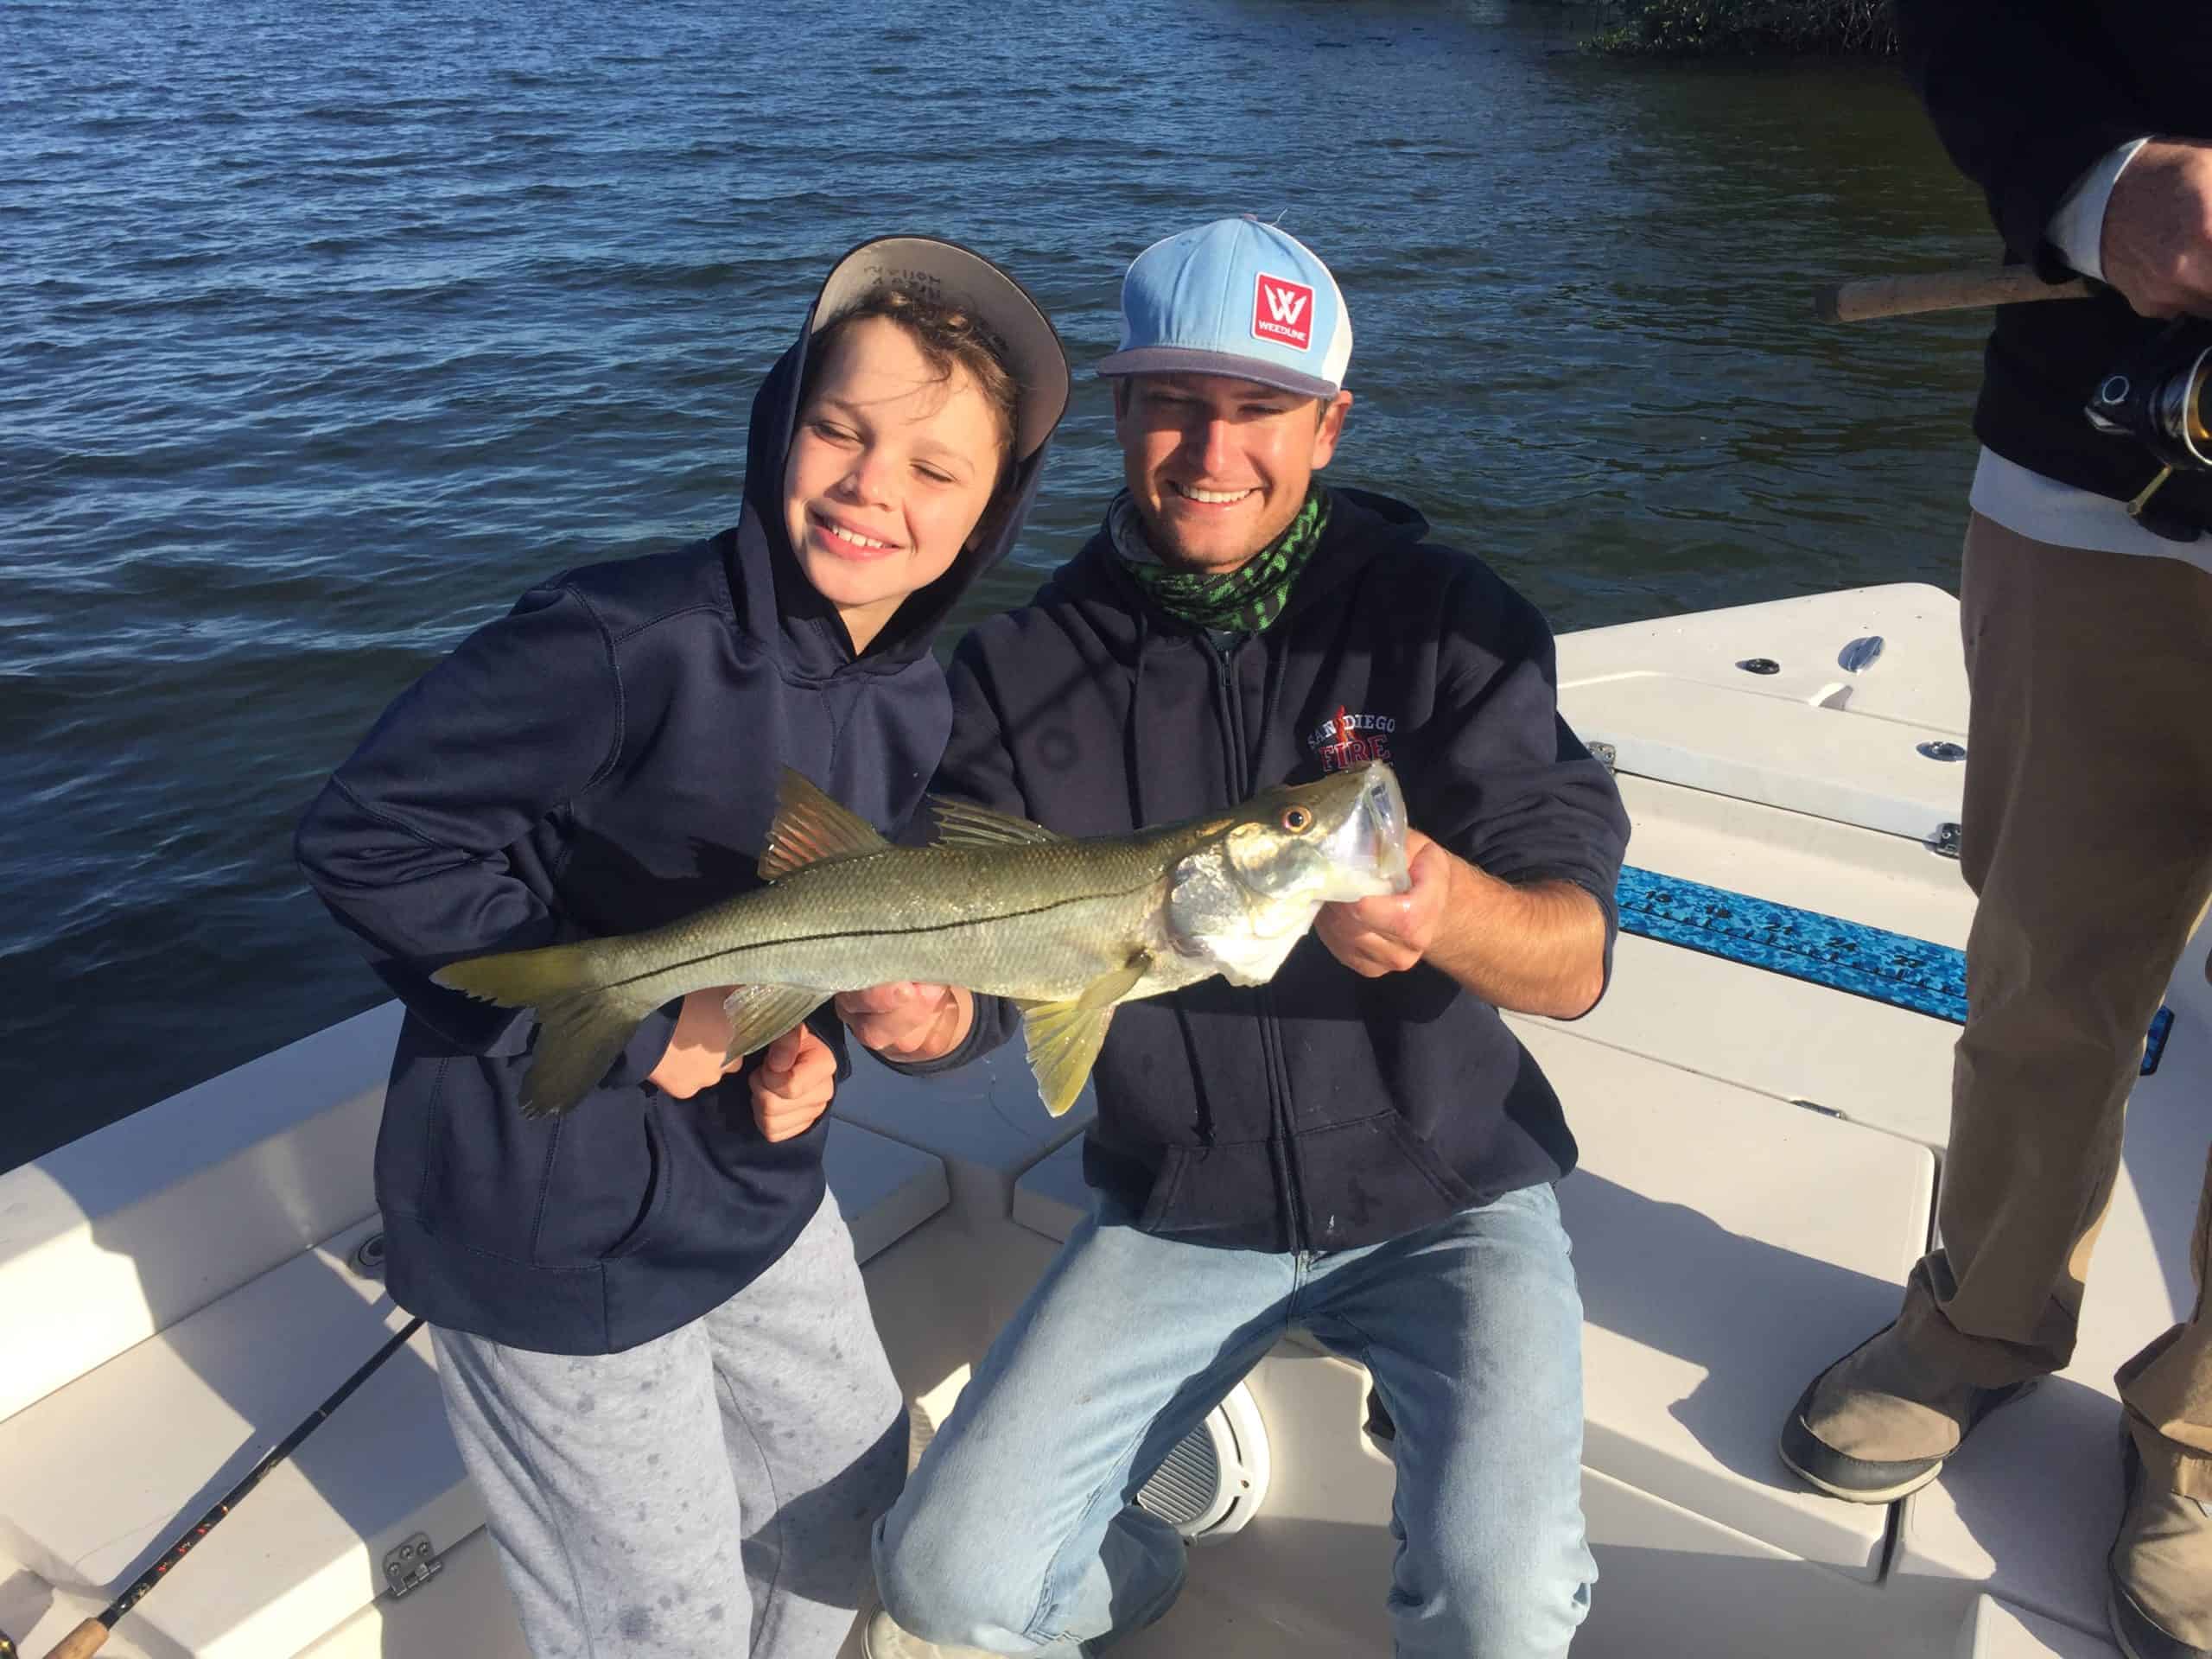 Fishing charter captain Matt Reynolds holding fish next to young boy